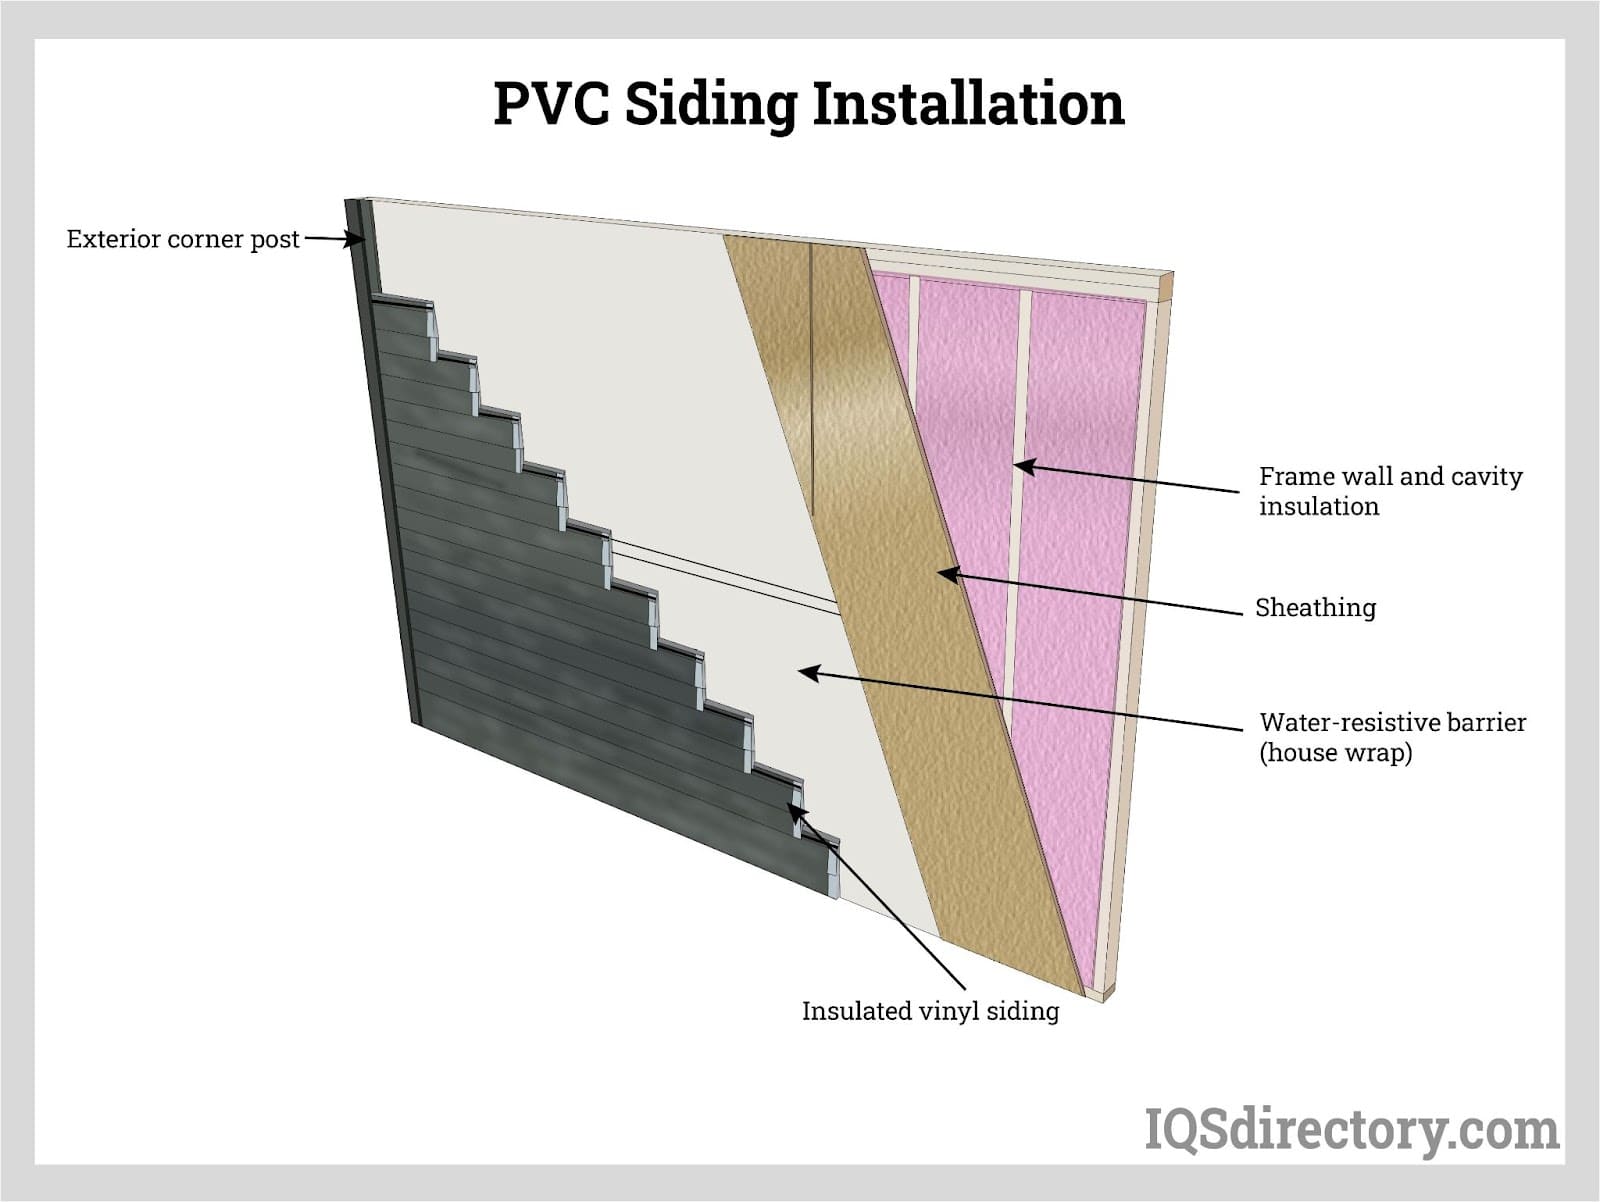 PVC Siding Installation